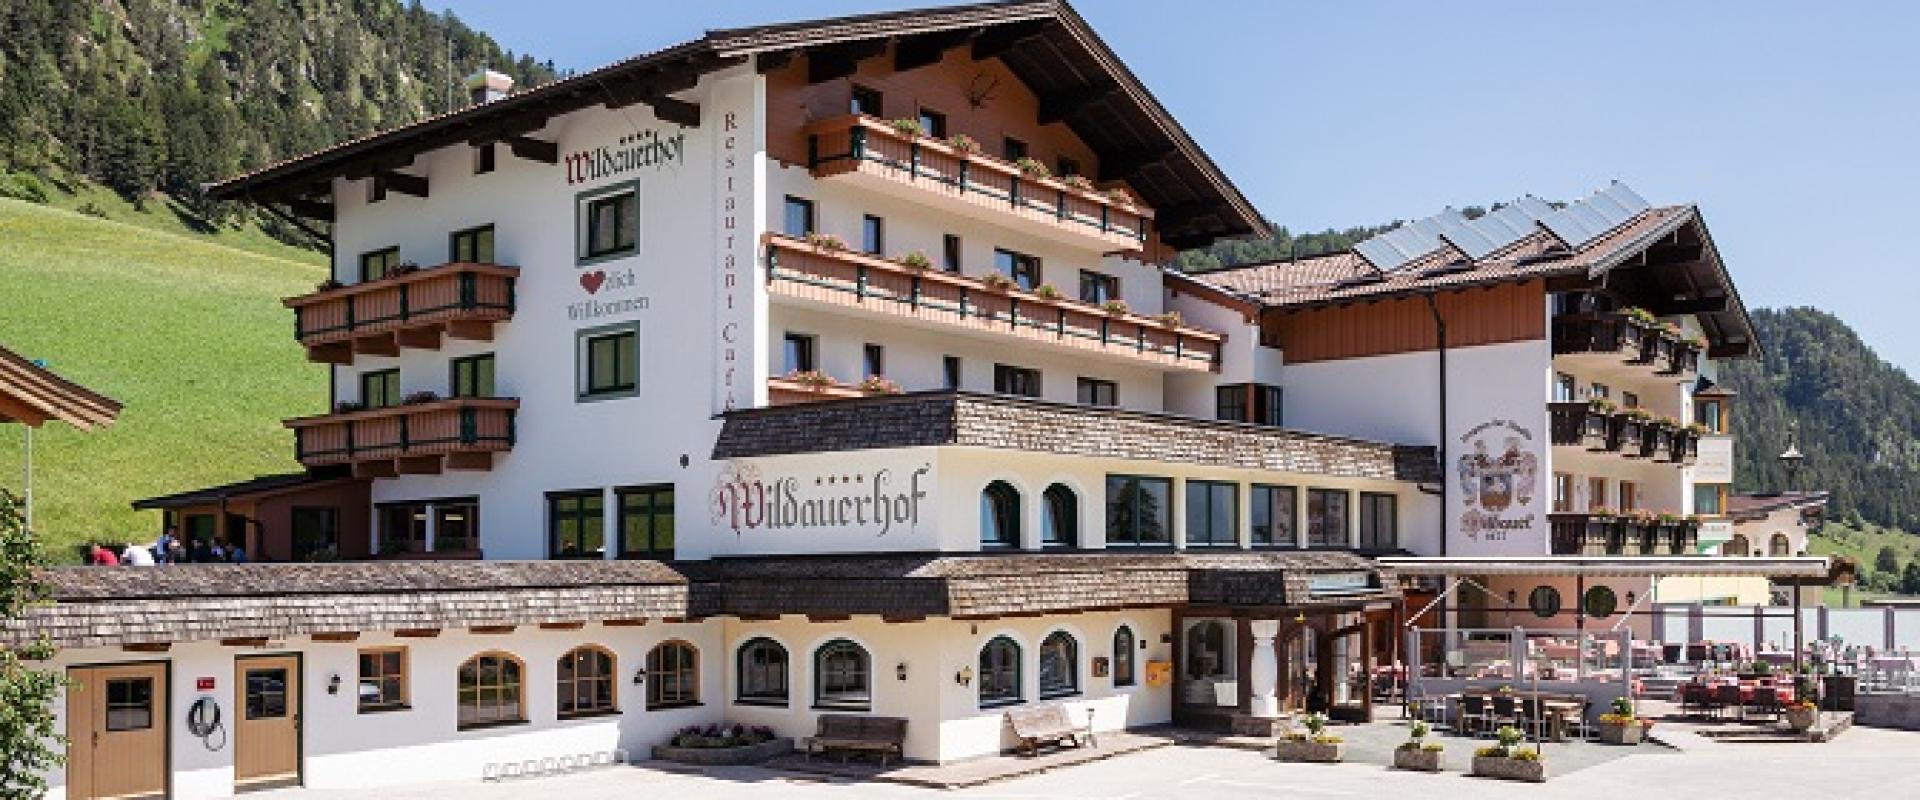 15448 Motorrad Hotel Wildauerhof in Tirol.jpg